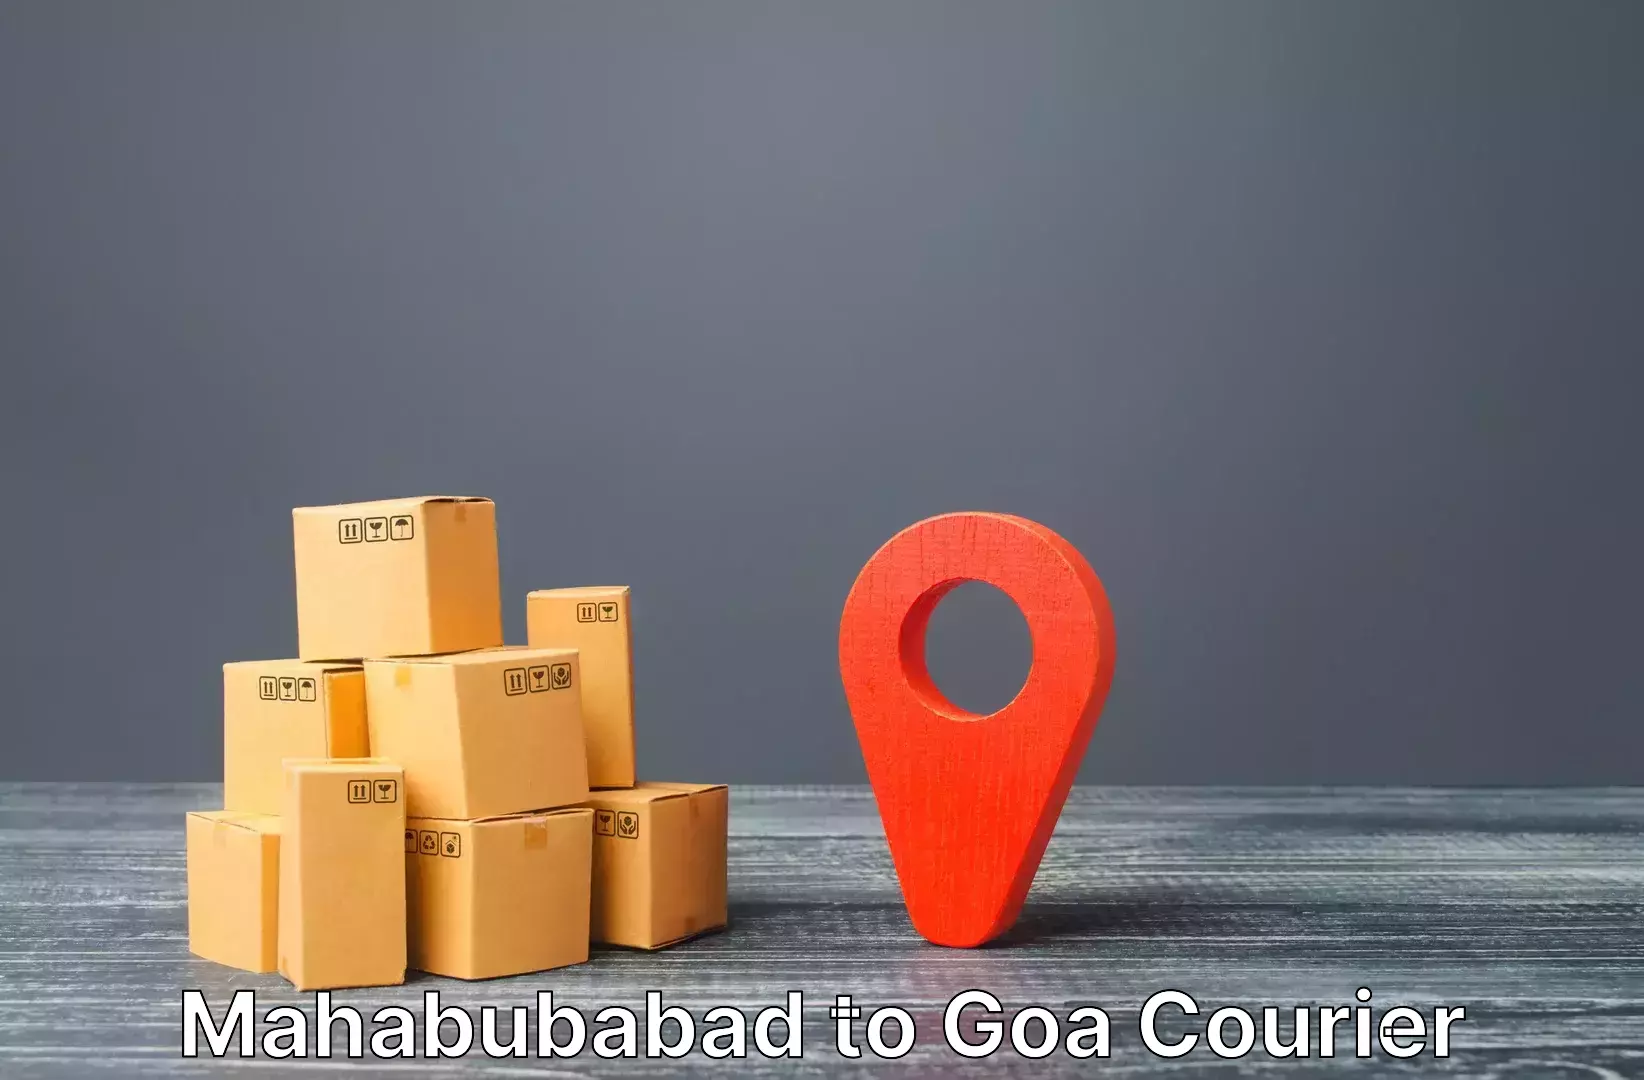 Emergency baggage service Mahabubabad to South Goa